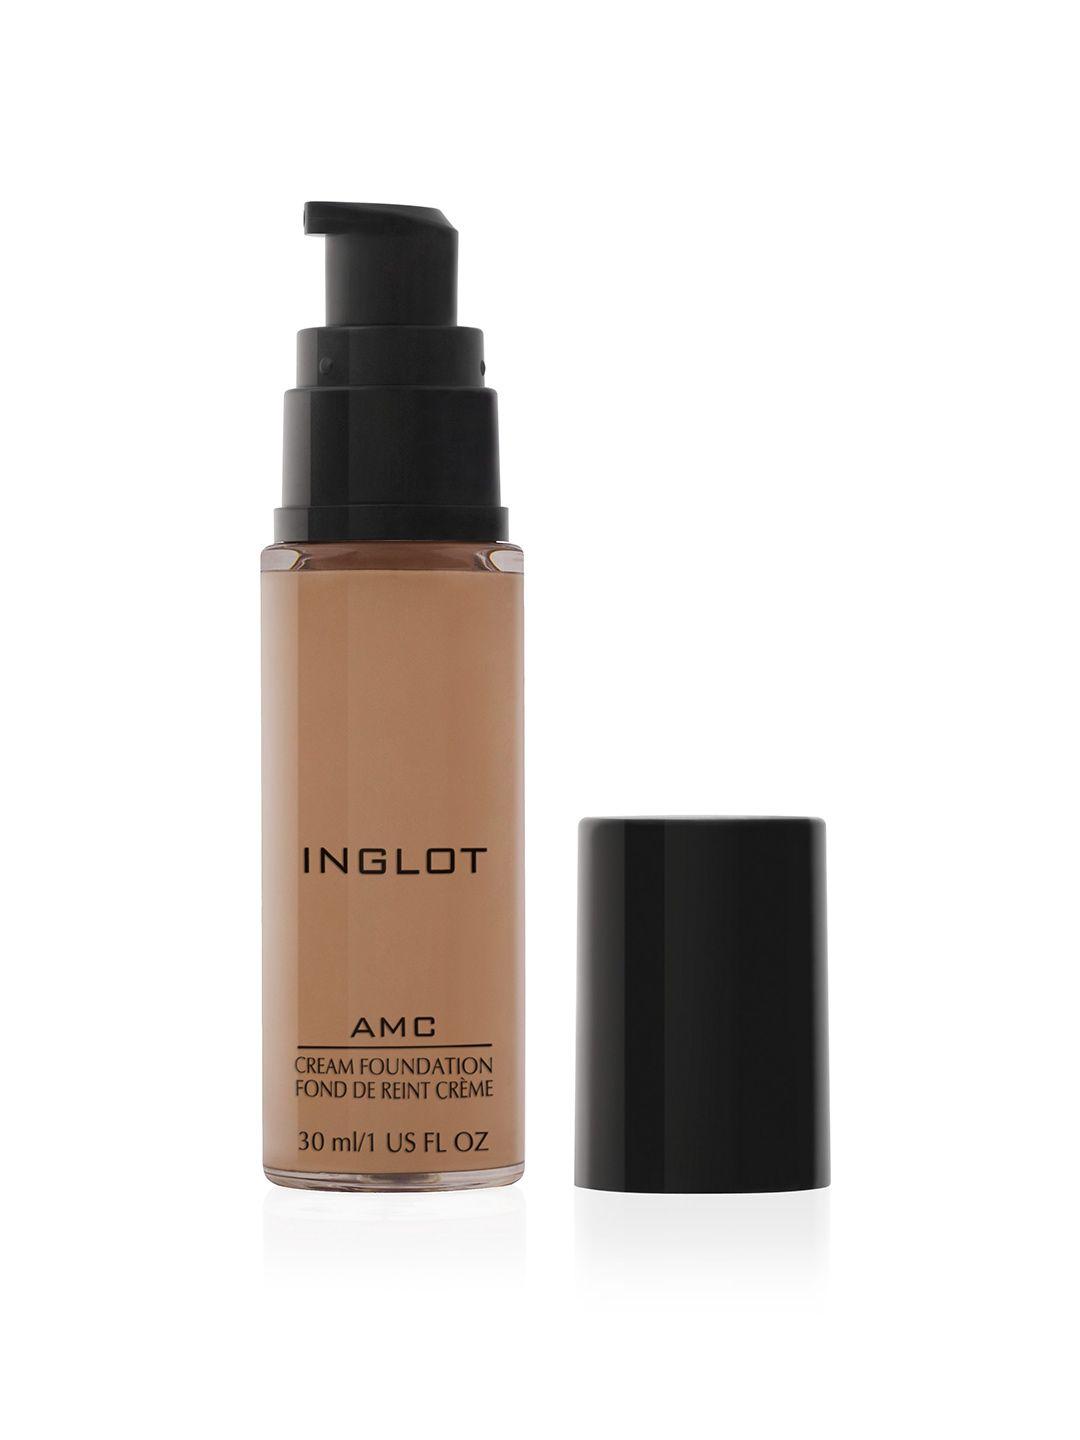 inglot amc cream foundation 30ml - nude mw 100